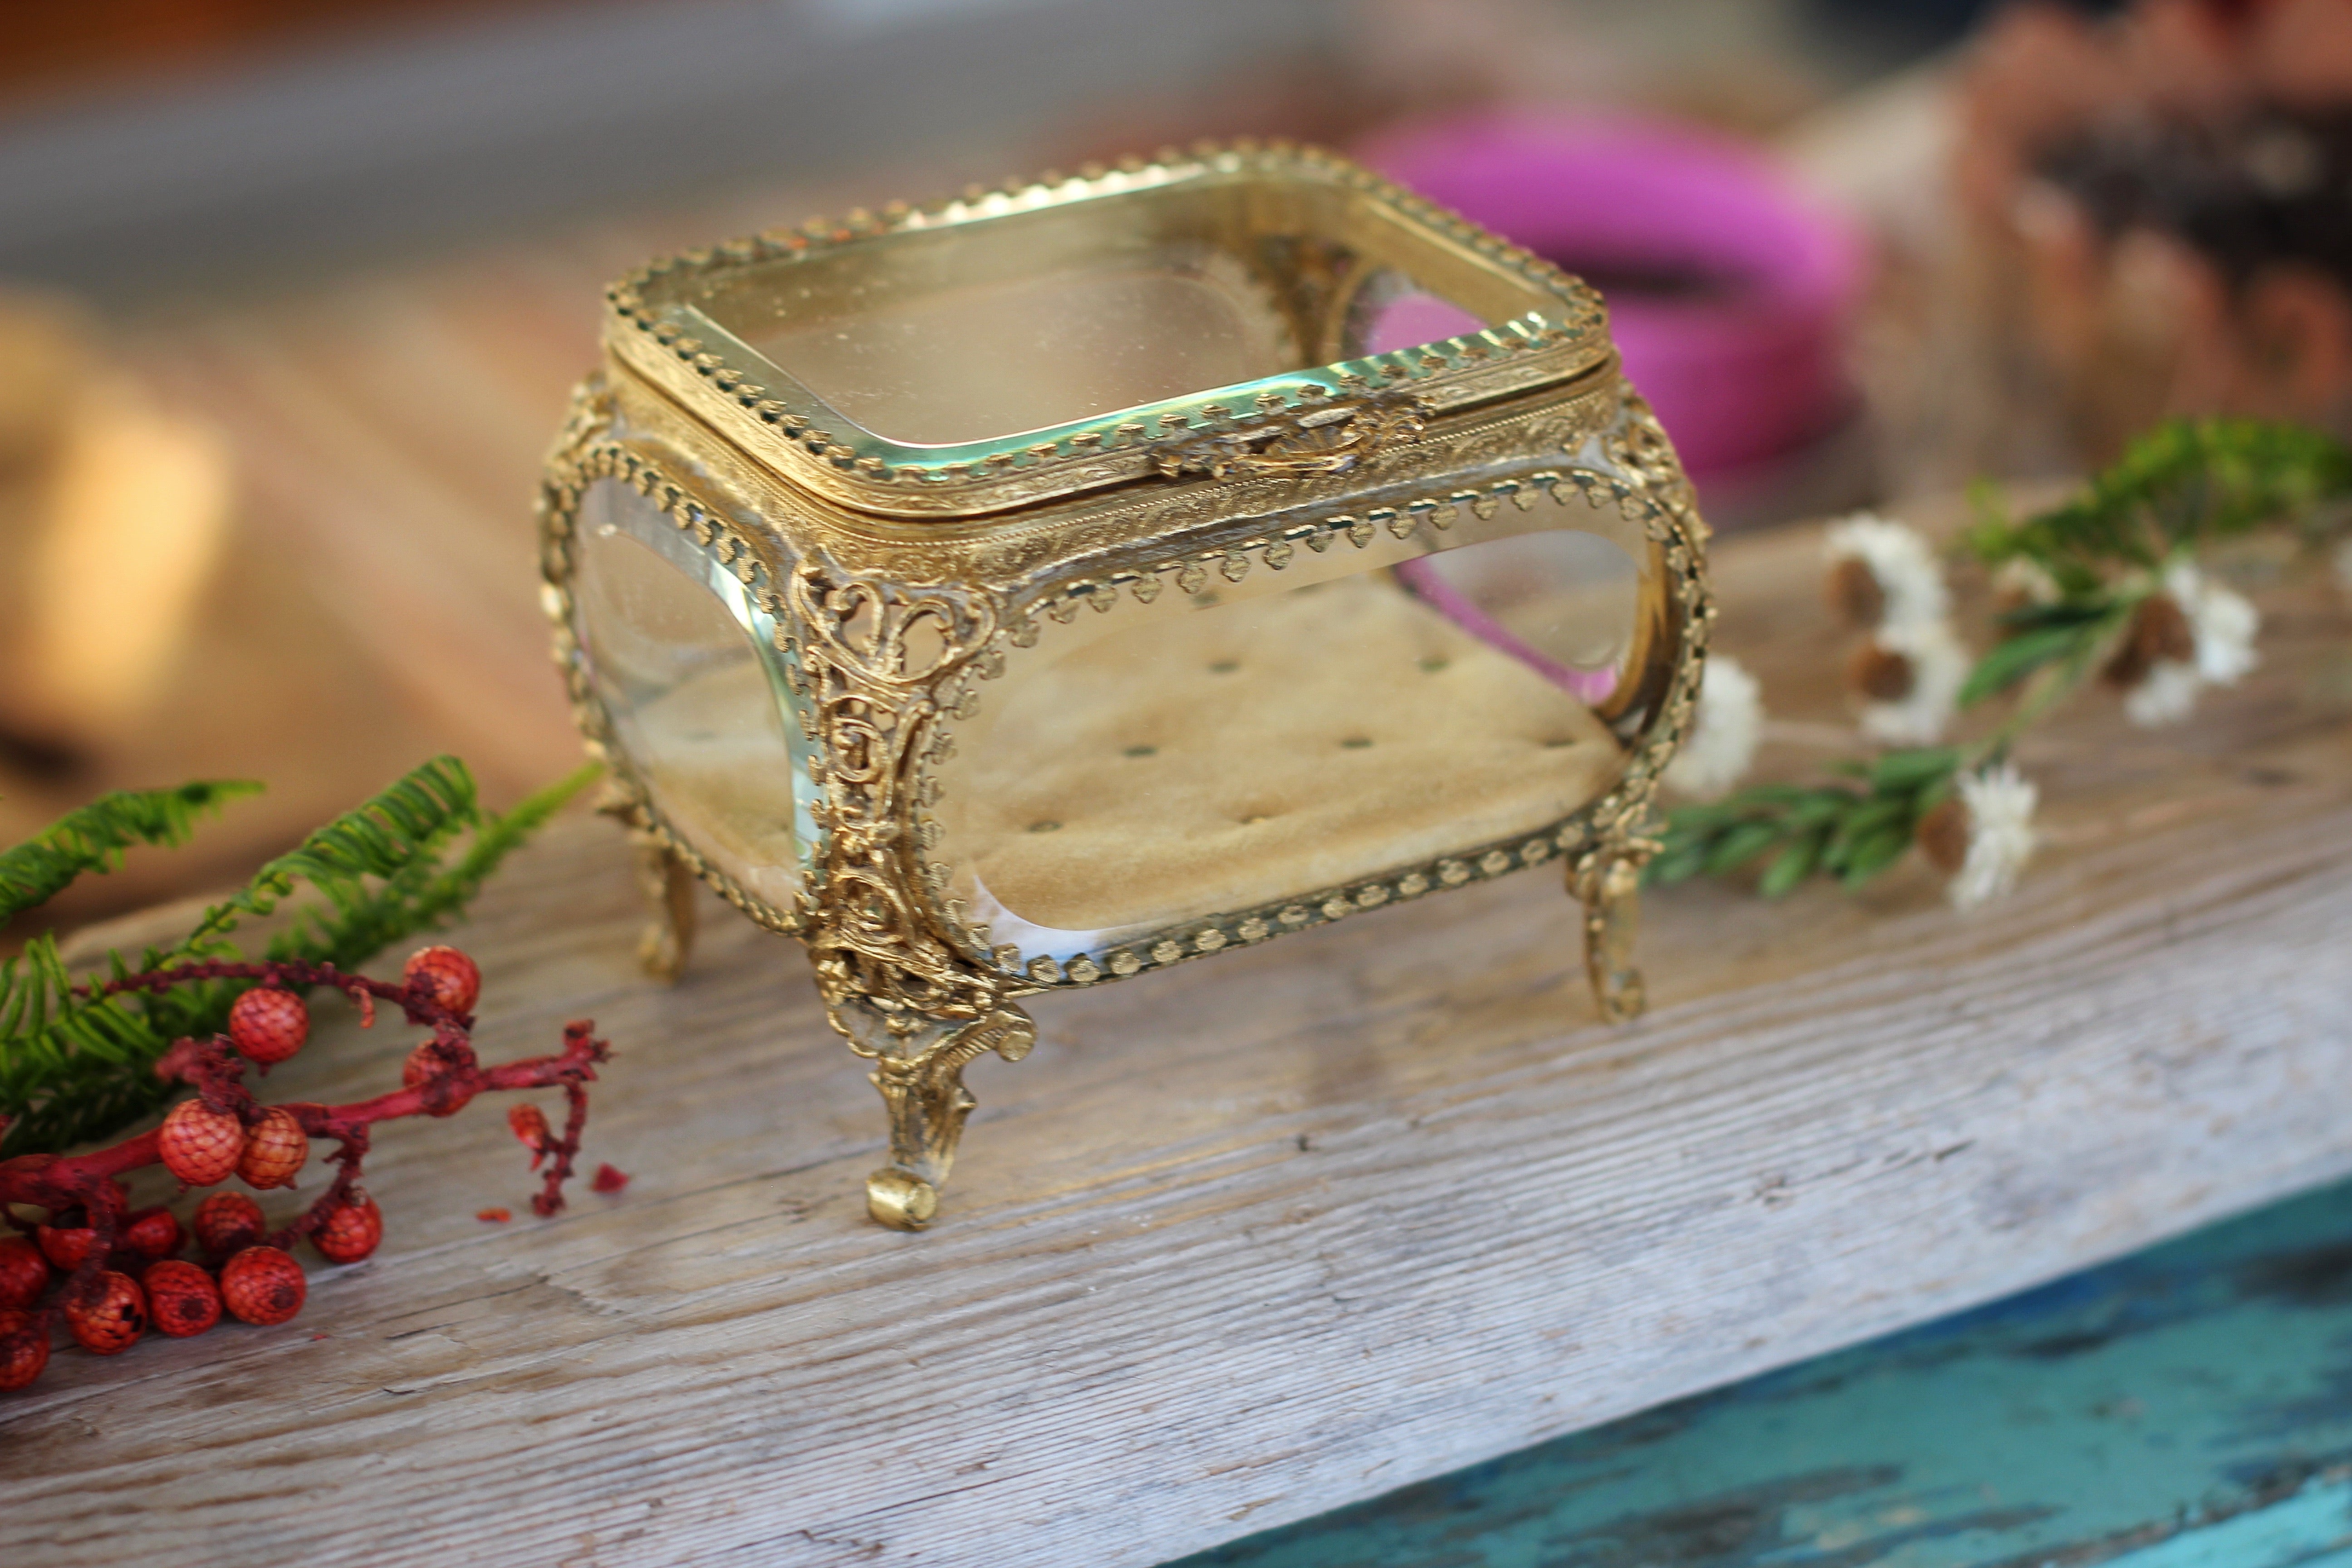 Antique Tufted Filigree Jewelry Box